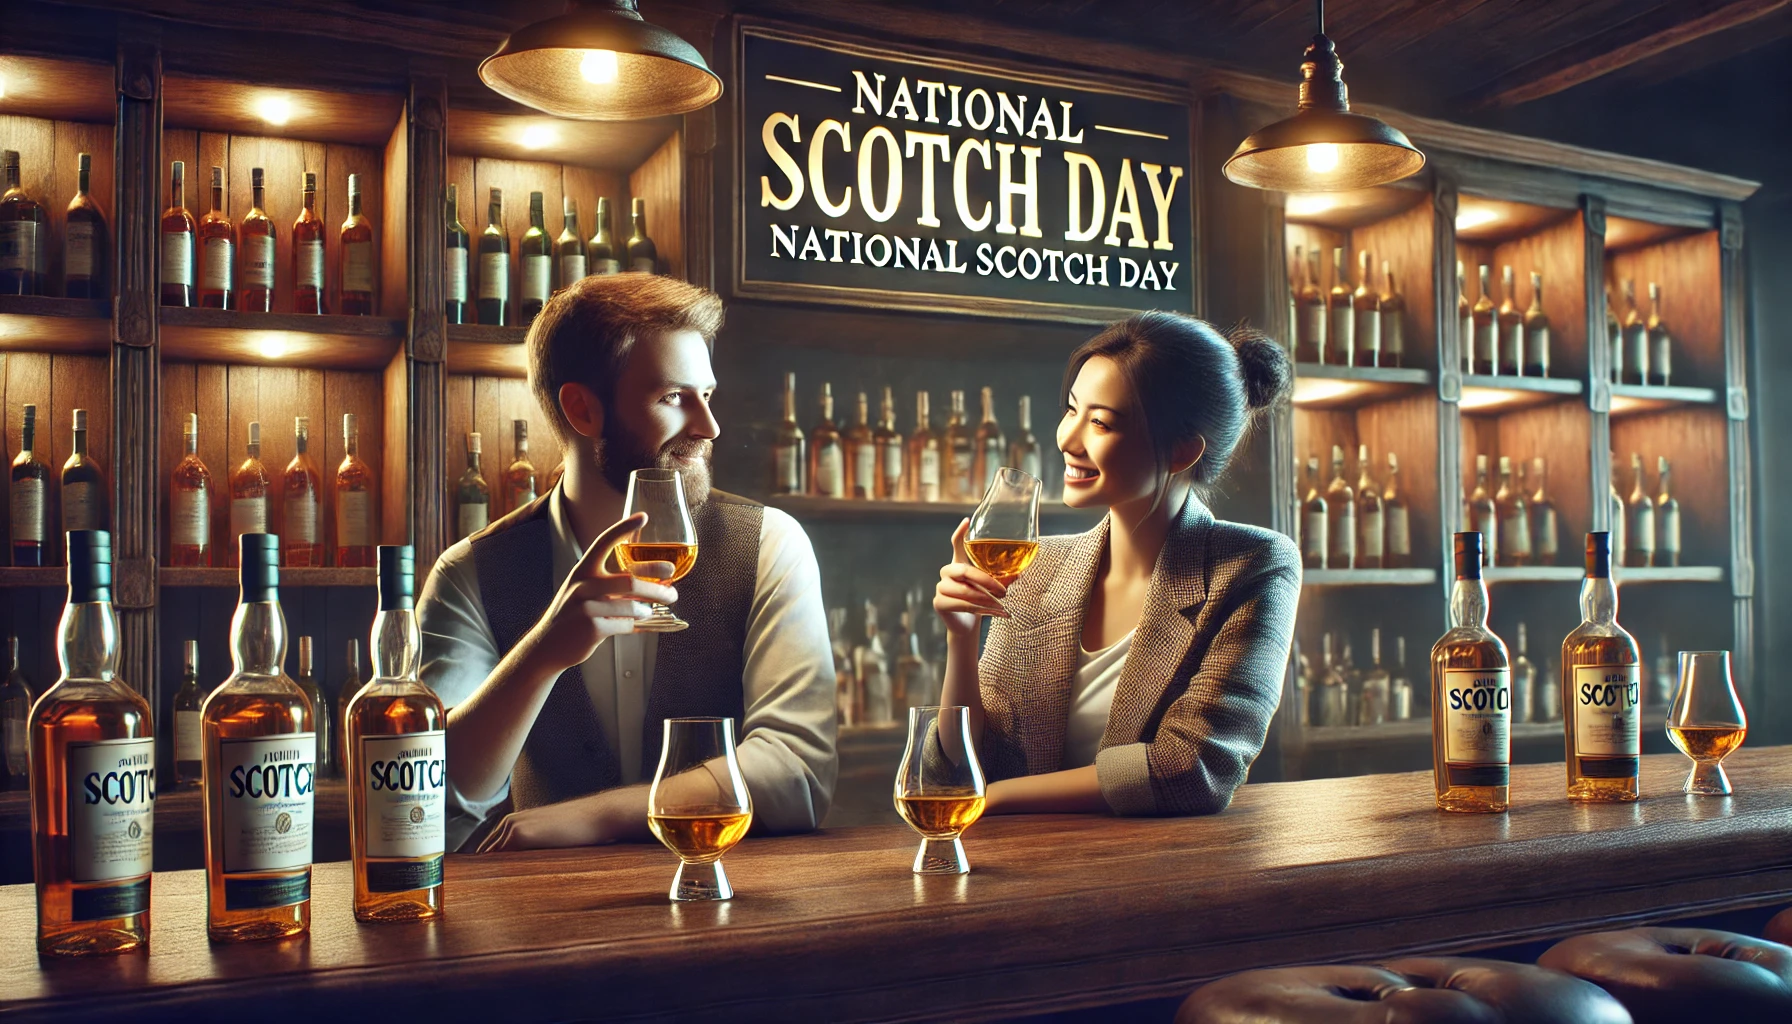 National Scotch Day